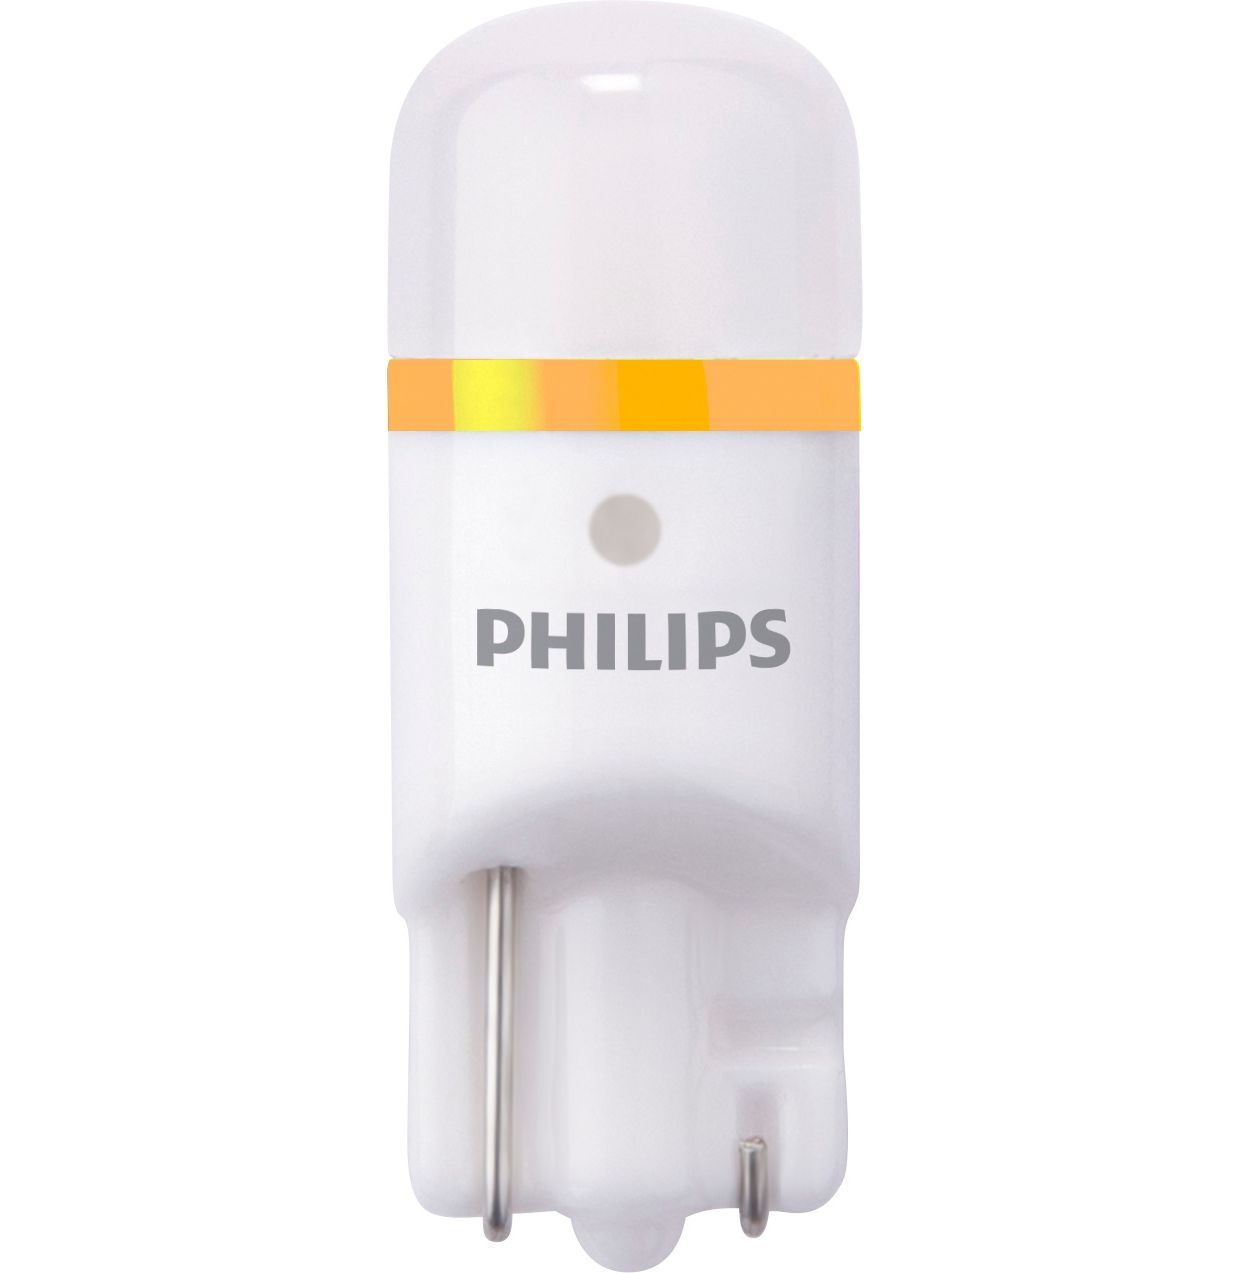 Philips T10 W5W X-treme Ultinon 4000K Warm White LED Light Bulb